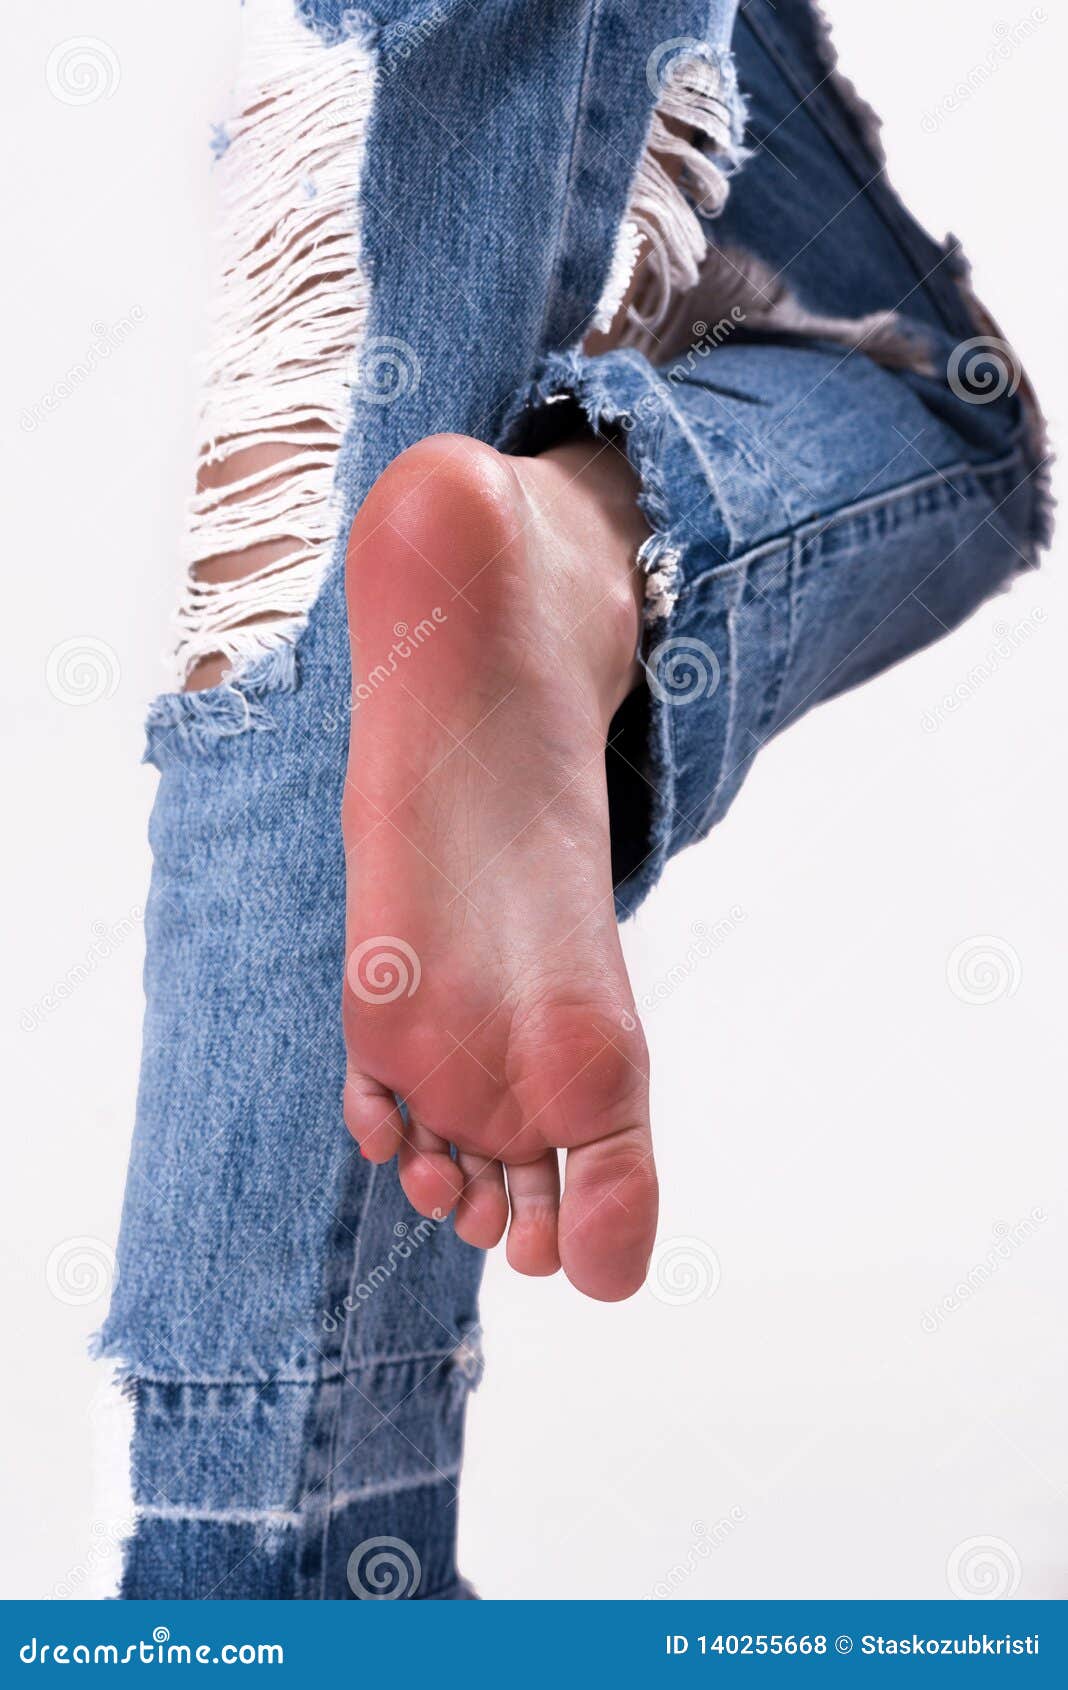 cute girl soles and feet